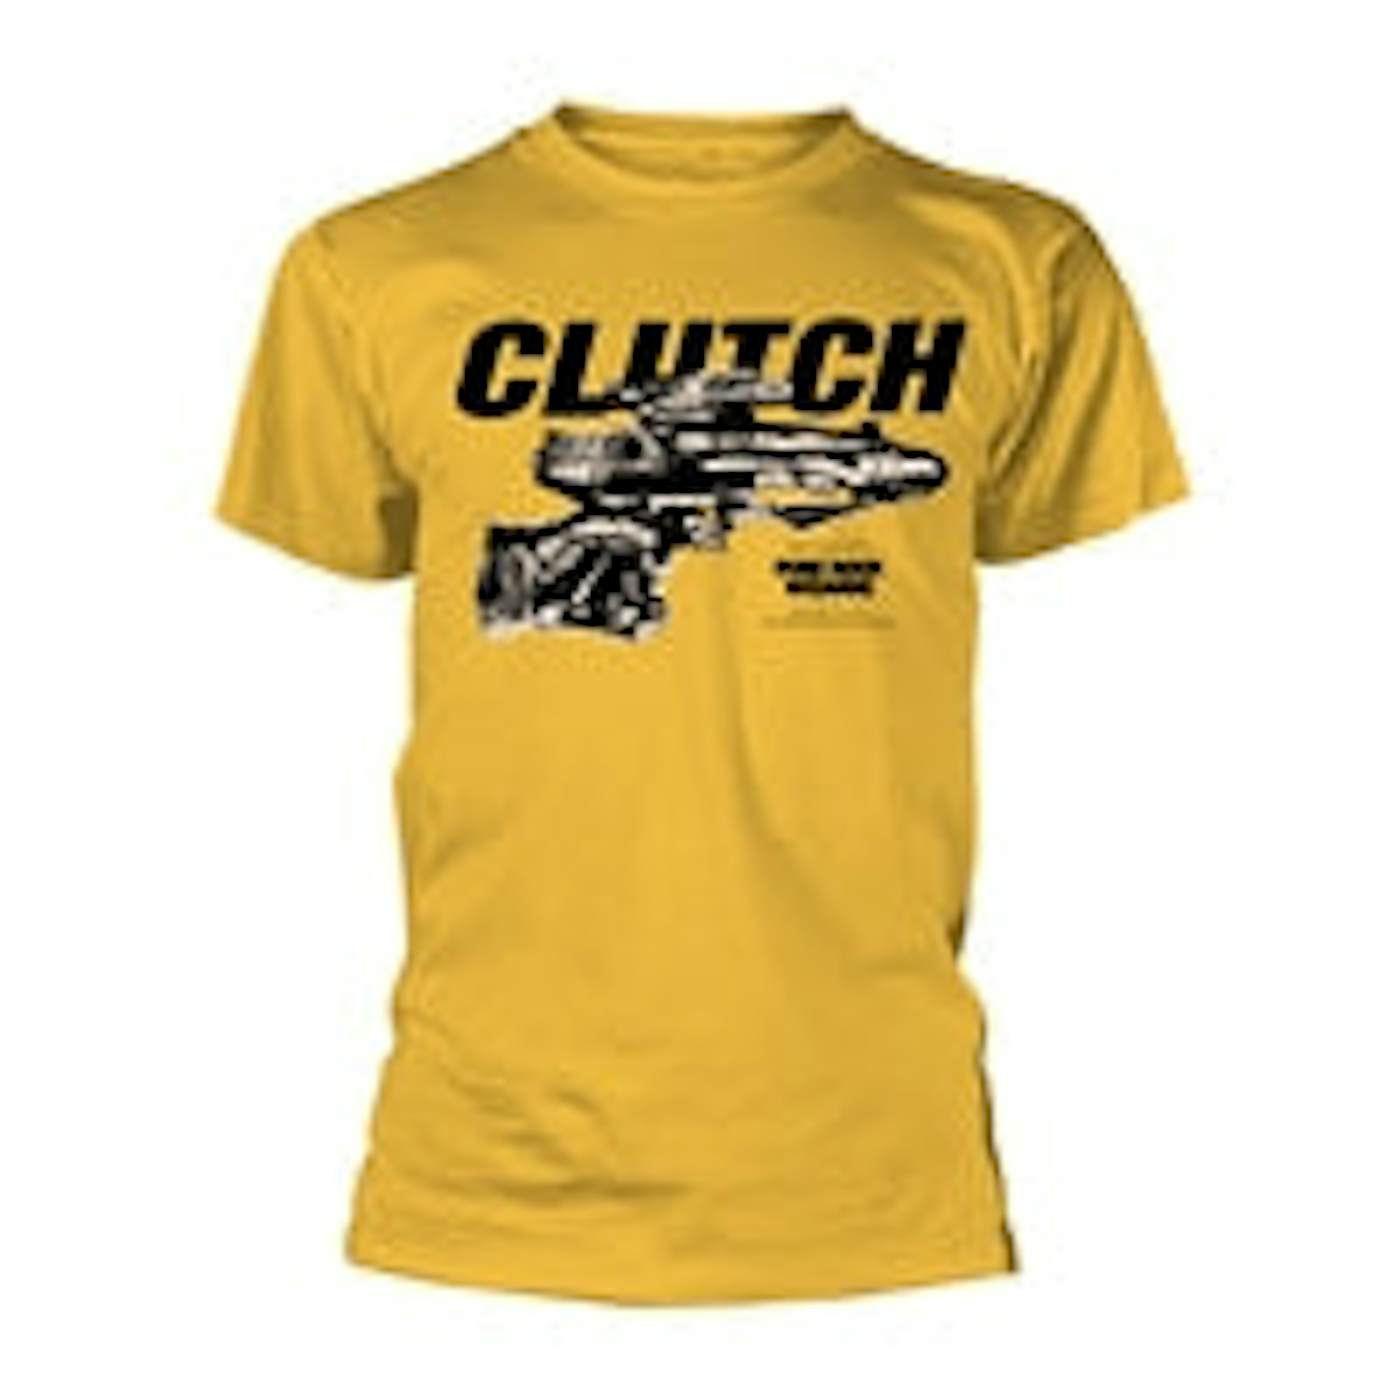 Clutch T Shirt - Pure Rock Wizards (Yellow)